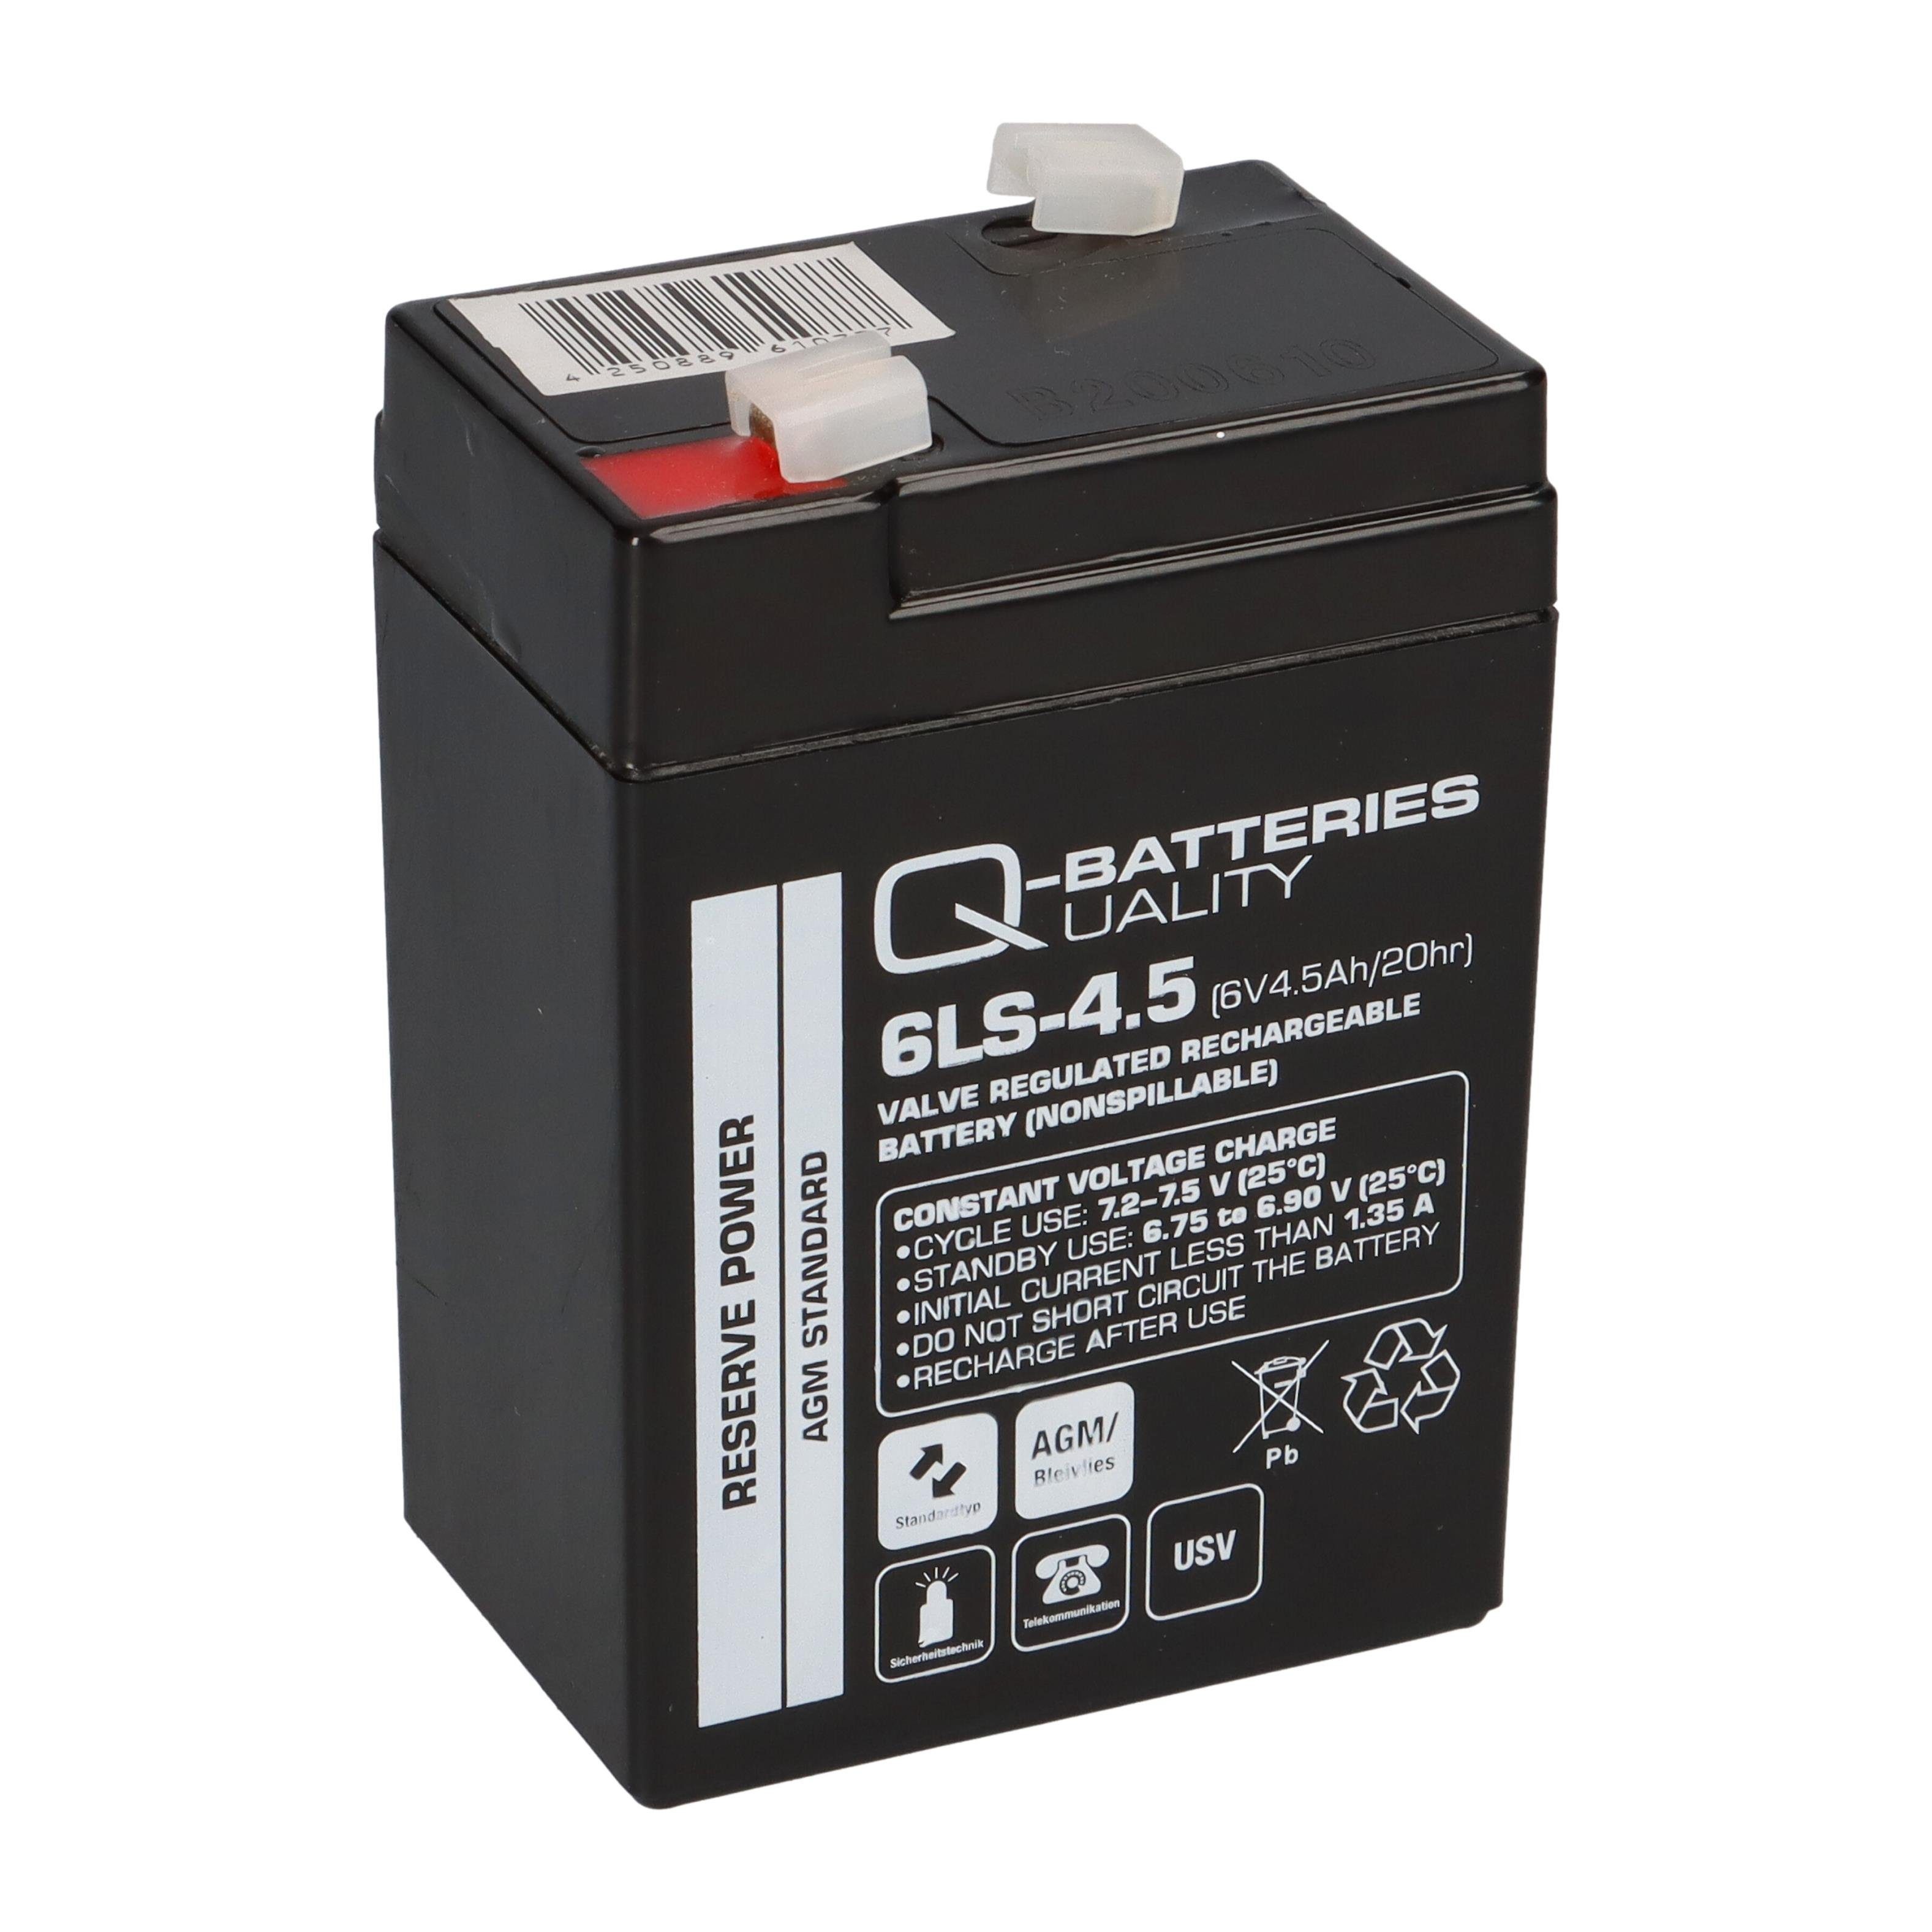 Q-Batteries AKKU BATTERIE 4,5Ah kompatibel 4A QB + Lader 5HR 6V 5Ah Bleiakkus + 20HR 10HR A